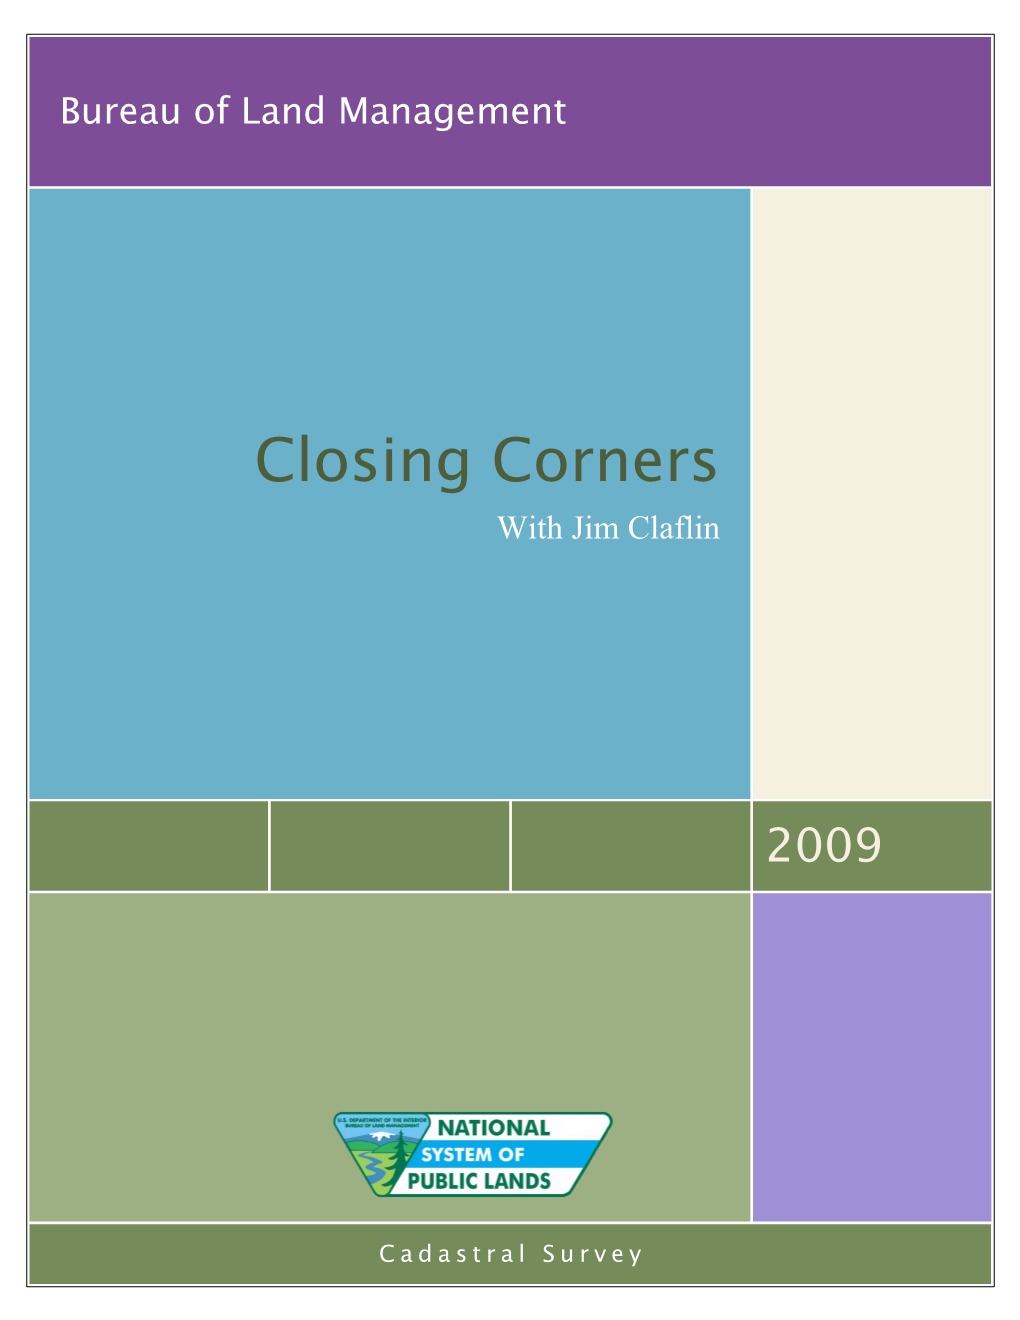 Closing Corners